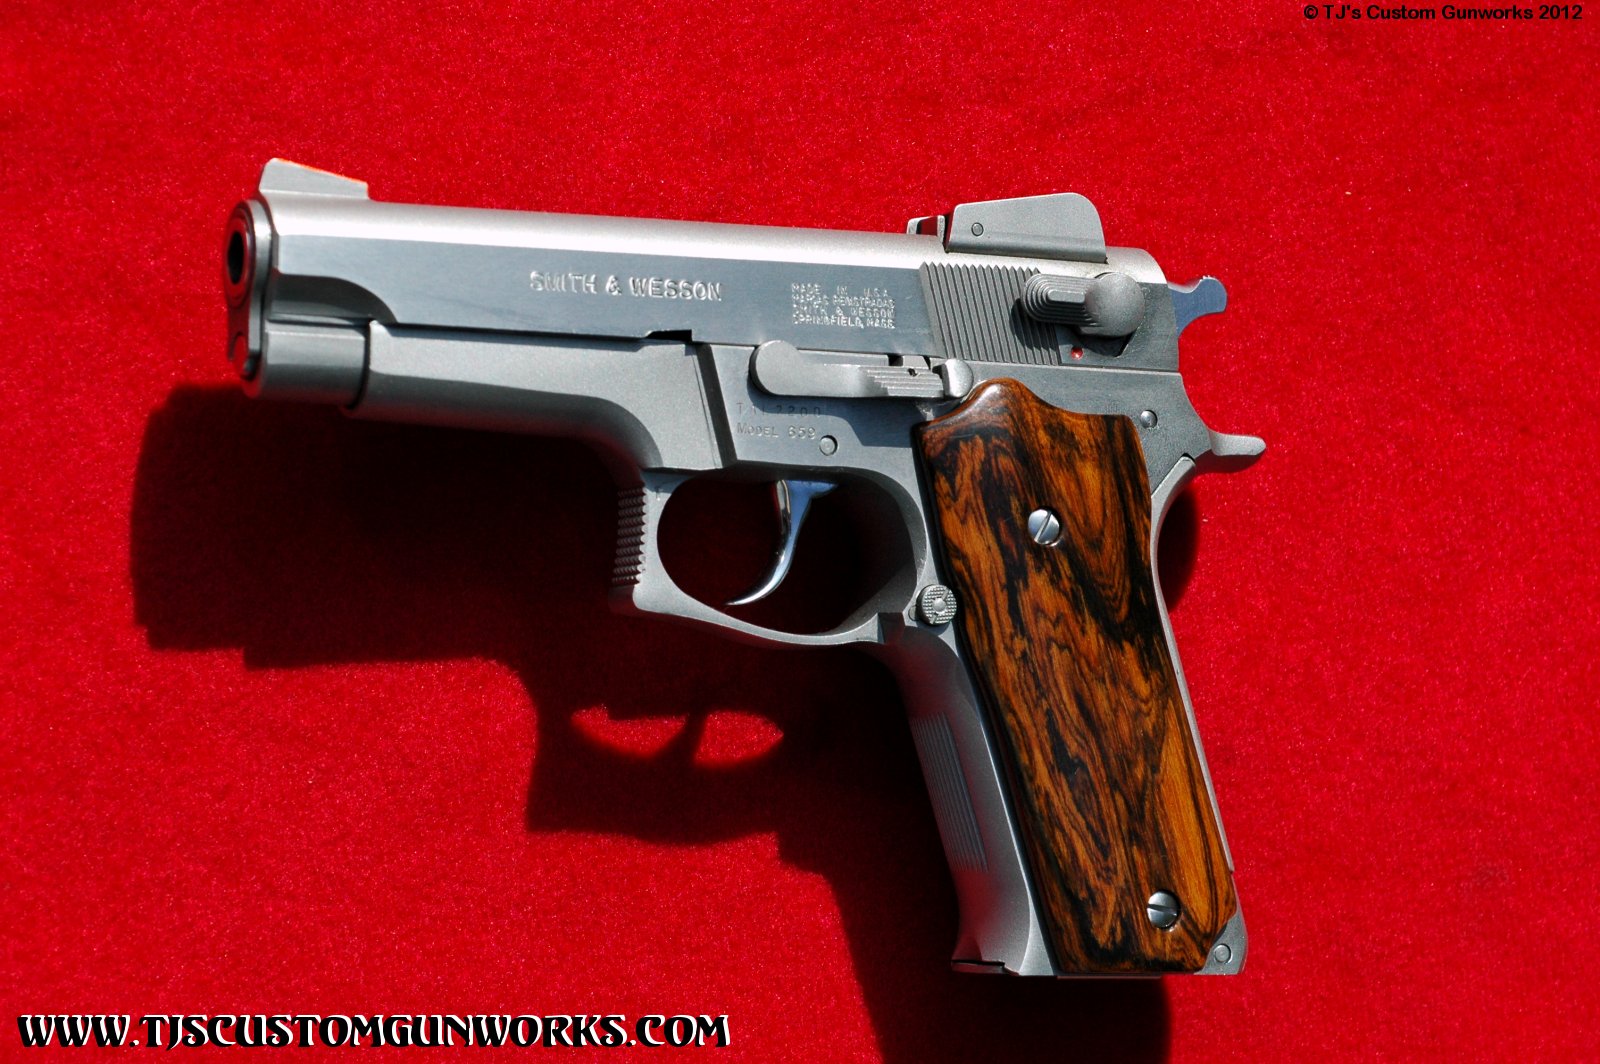 TJ's Custom Smith & Wesson 659 9mm 1